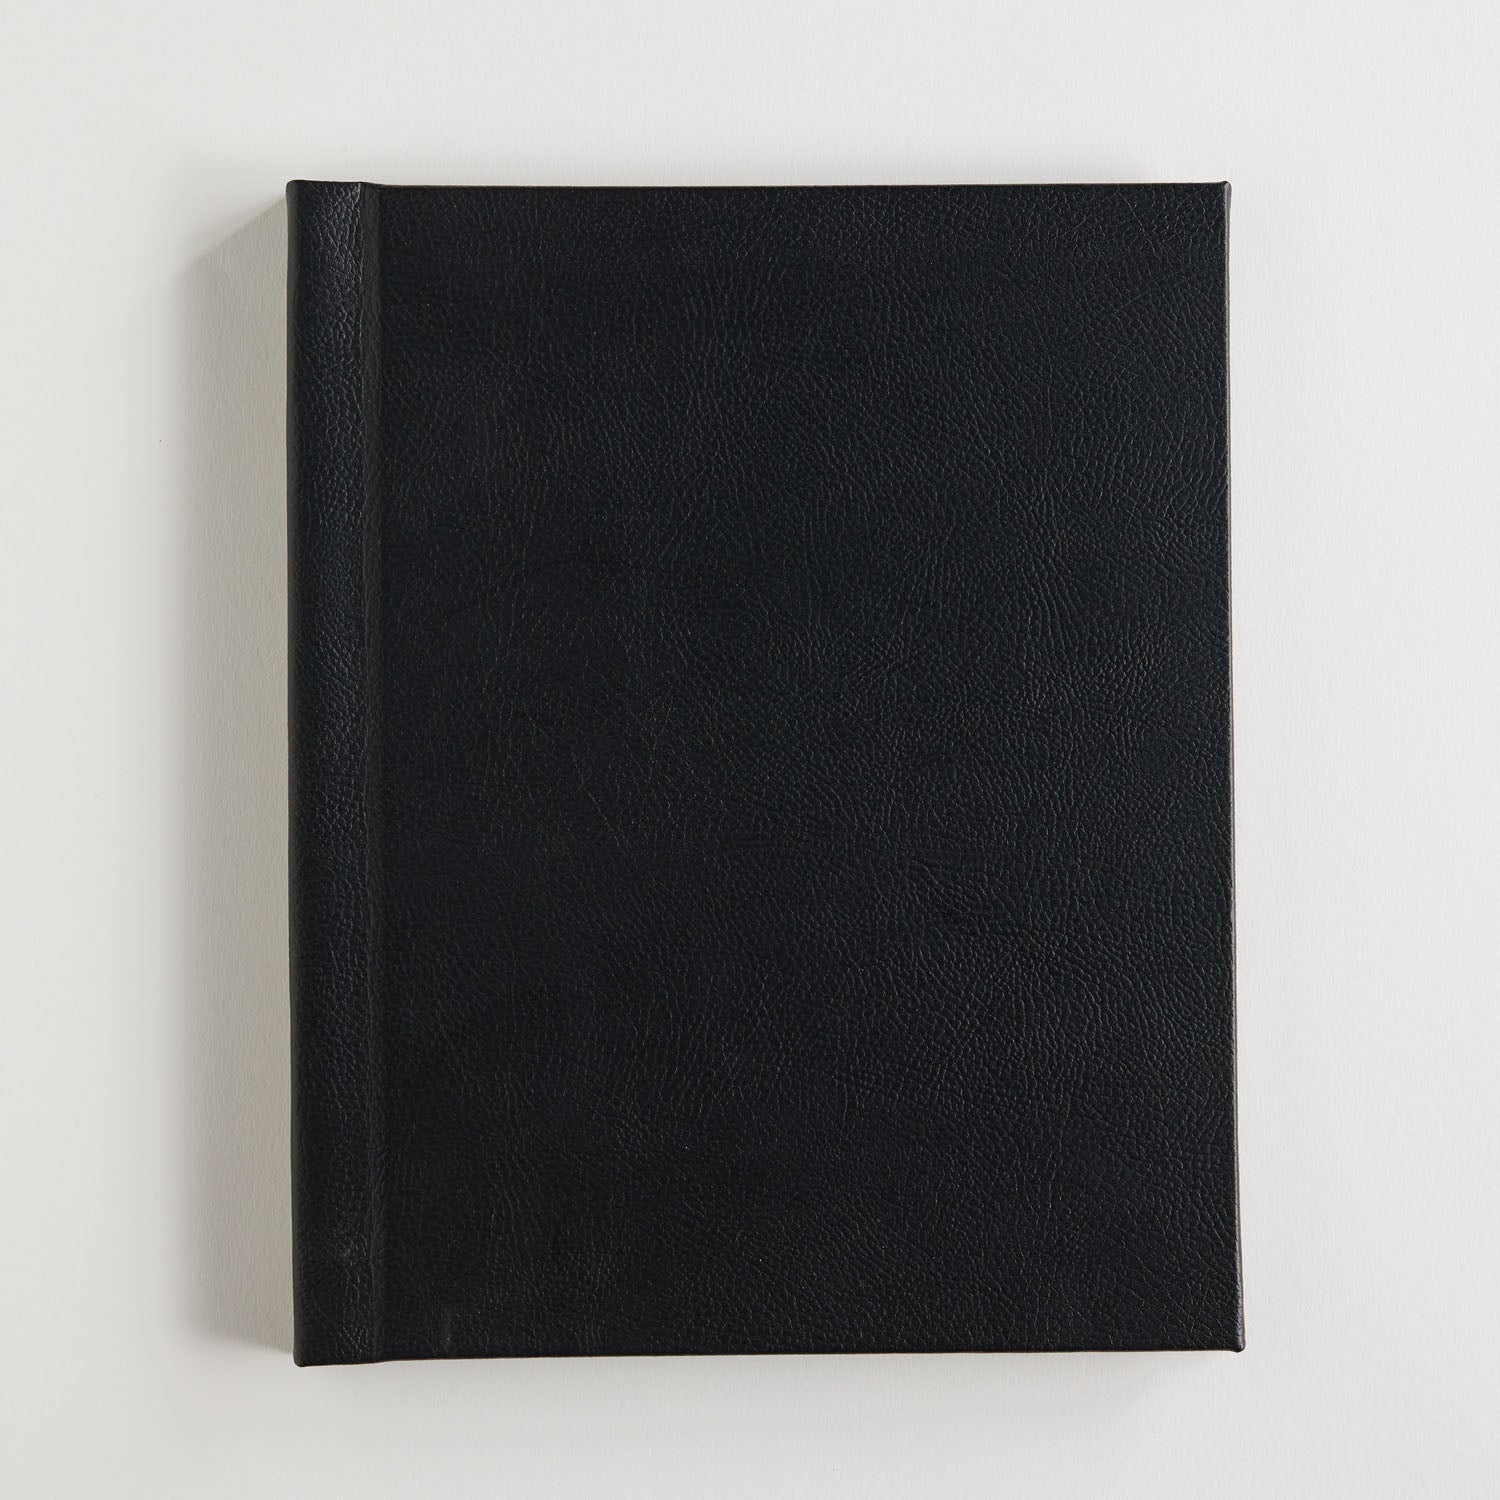 11x14 Flush Mount Black Leather Cover Photo Book / Lustre Paper